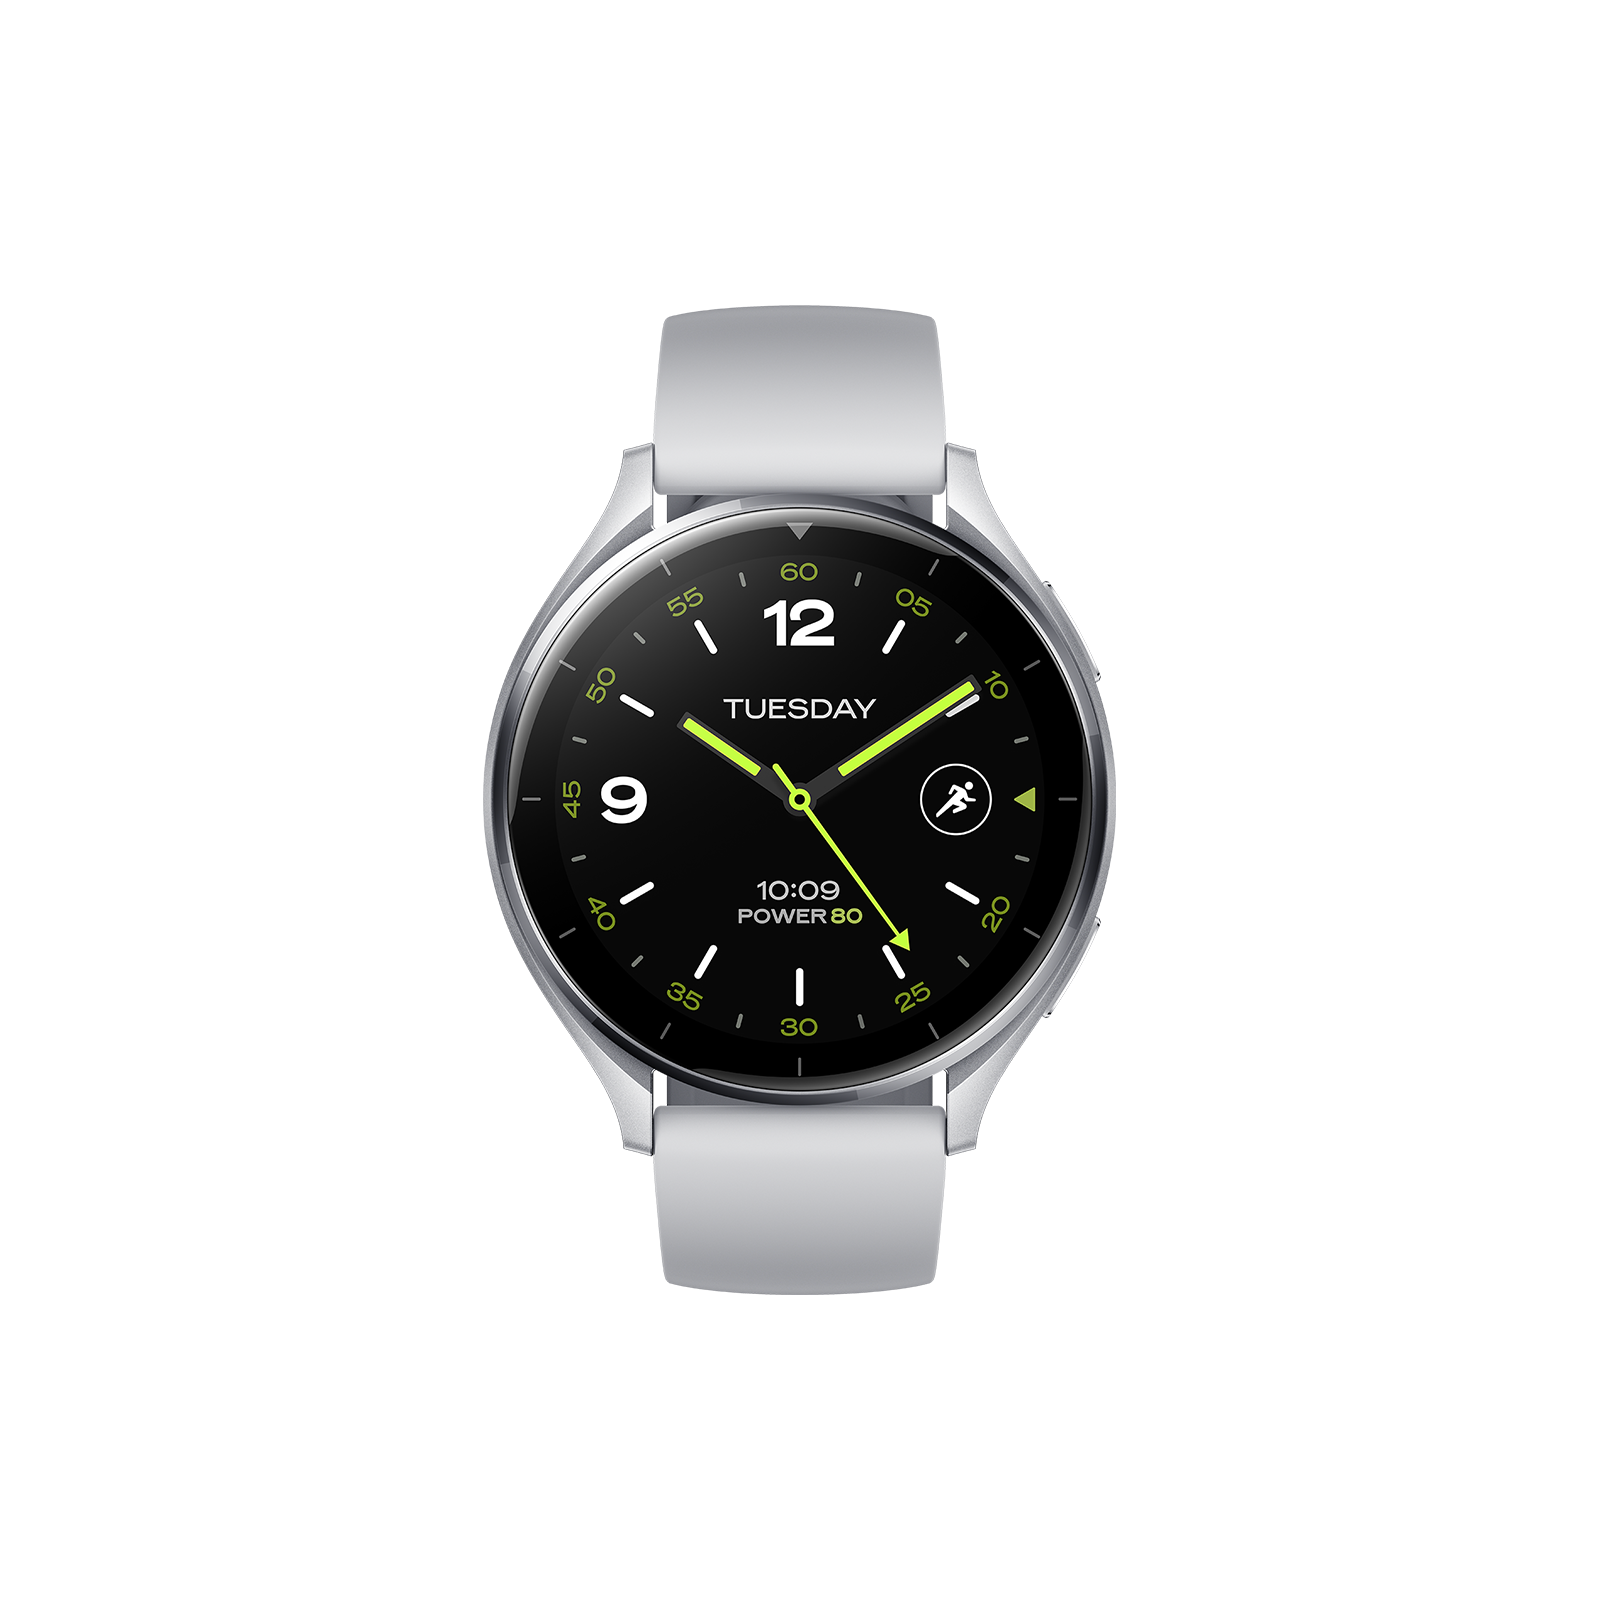 KIZOCAY Smart Watch with Earbuds 2 in 1 Wireless Bluetooth Earphones Men  Women Smartwatch For Android iOS - Walmart.com